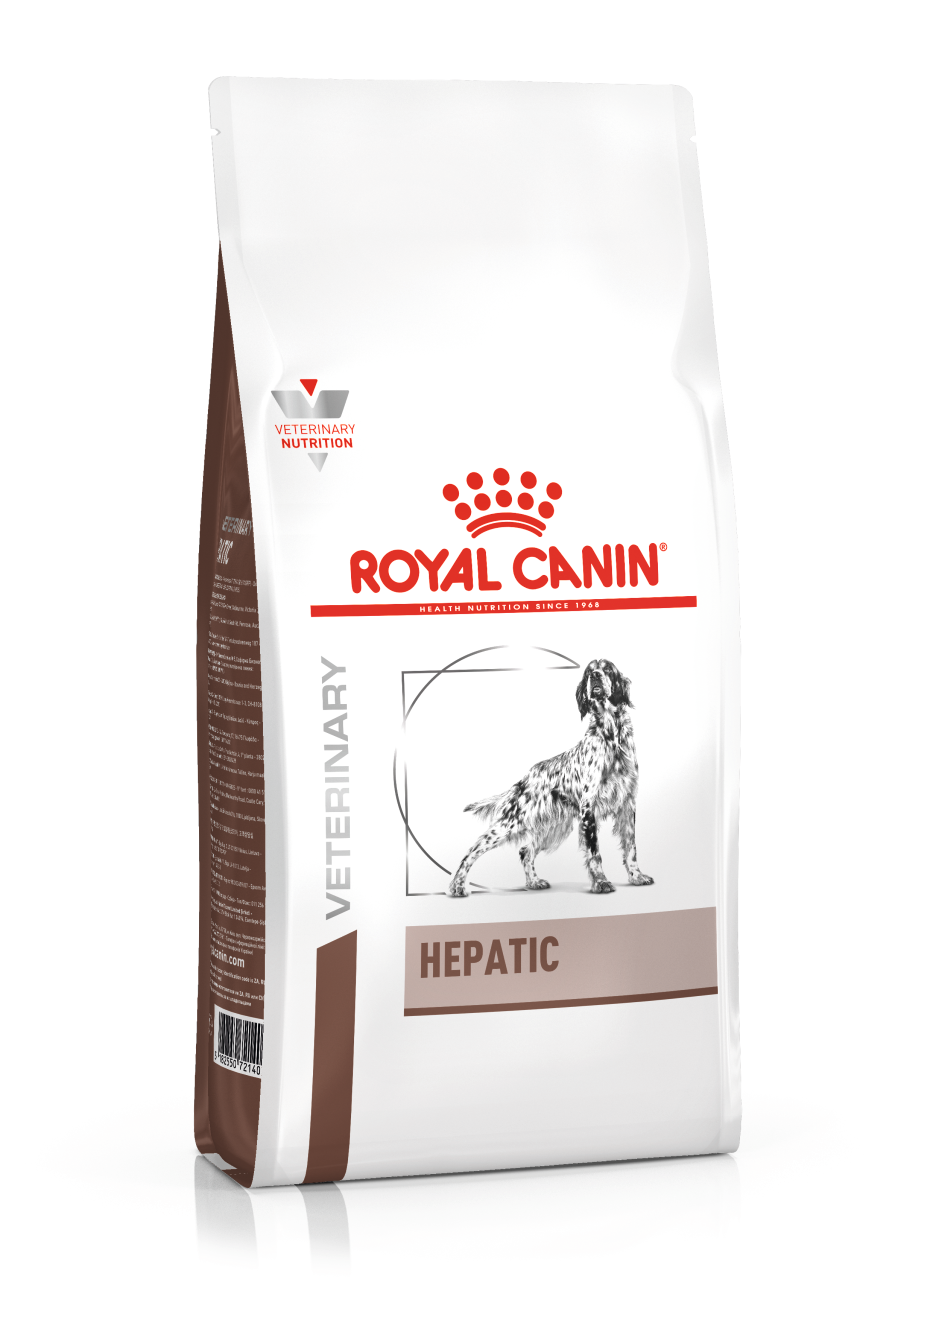 Royal Canin Hepatic hond 2x1.5 kg